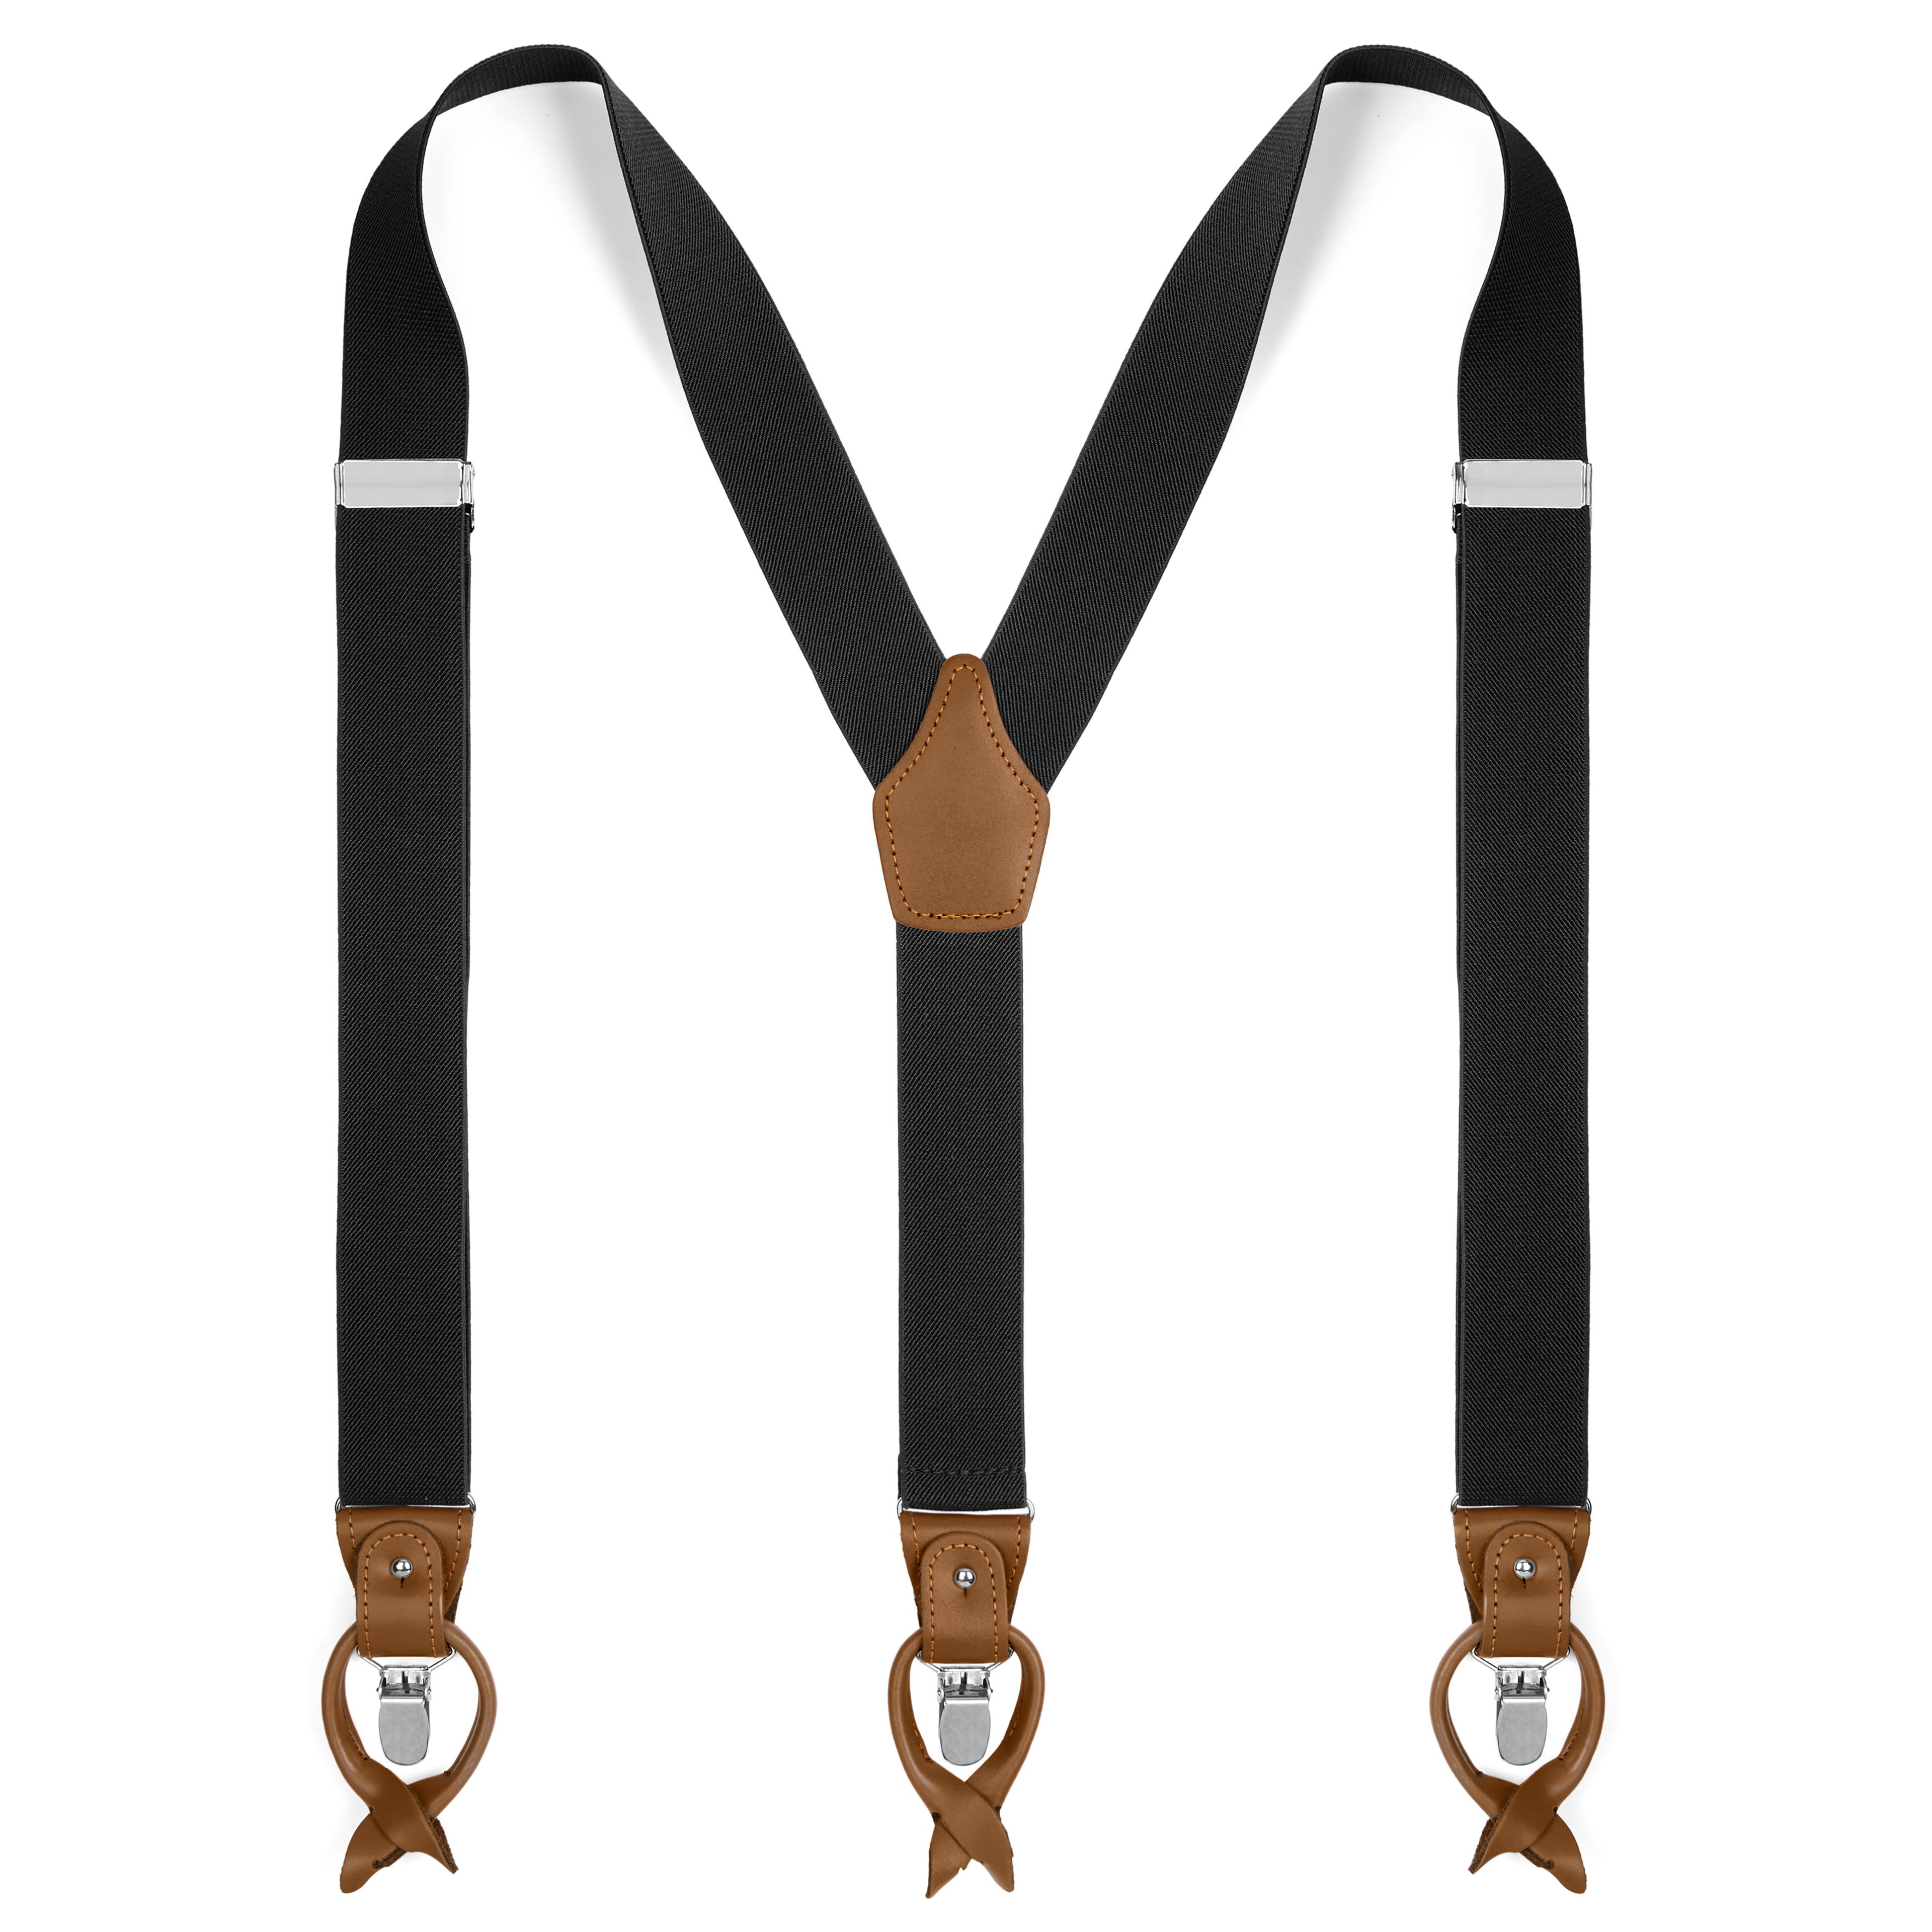 suspenders suit - Google Search  Suspenders, Button suspenders, Suit and  tie